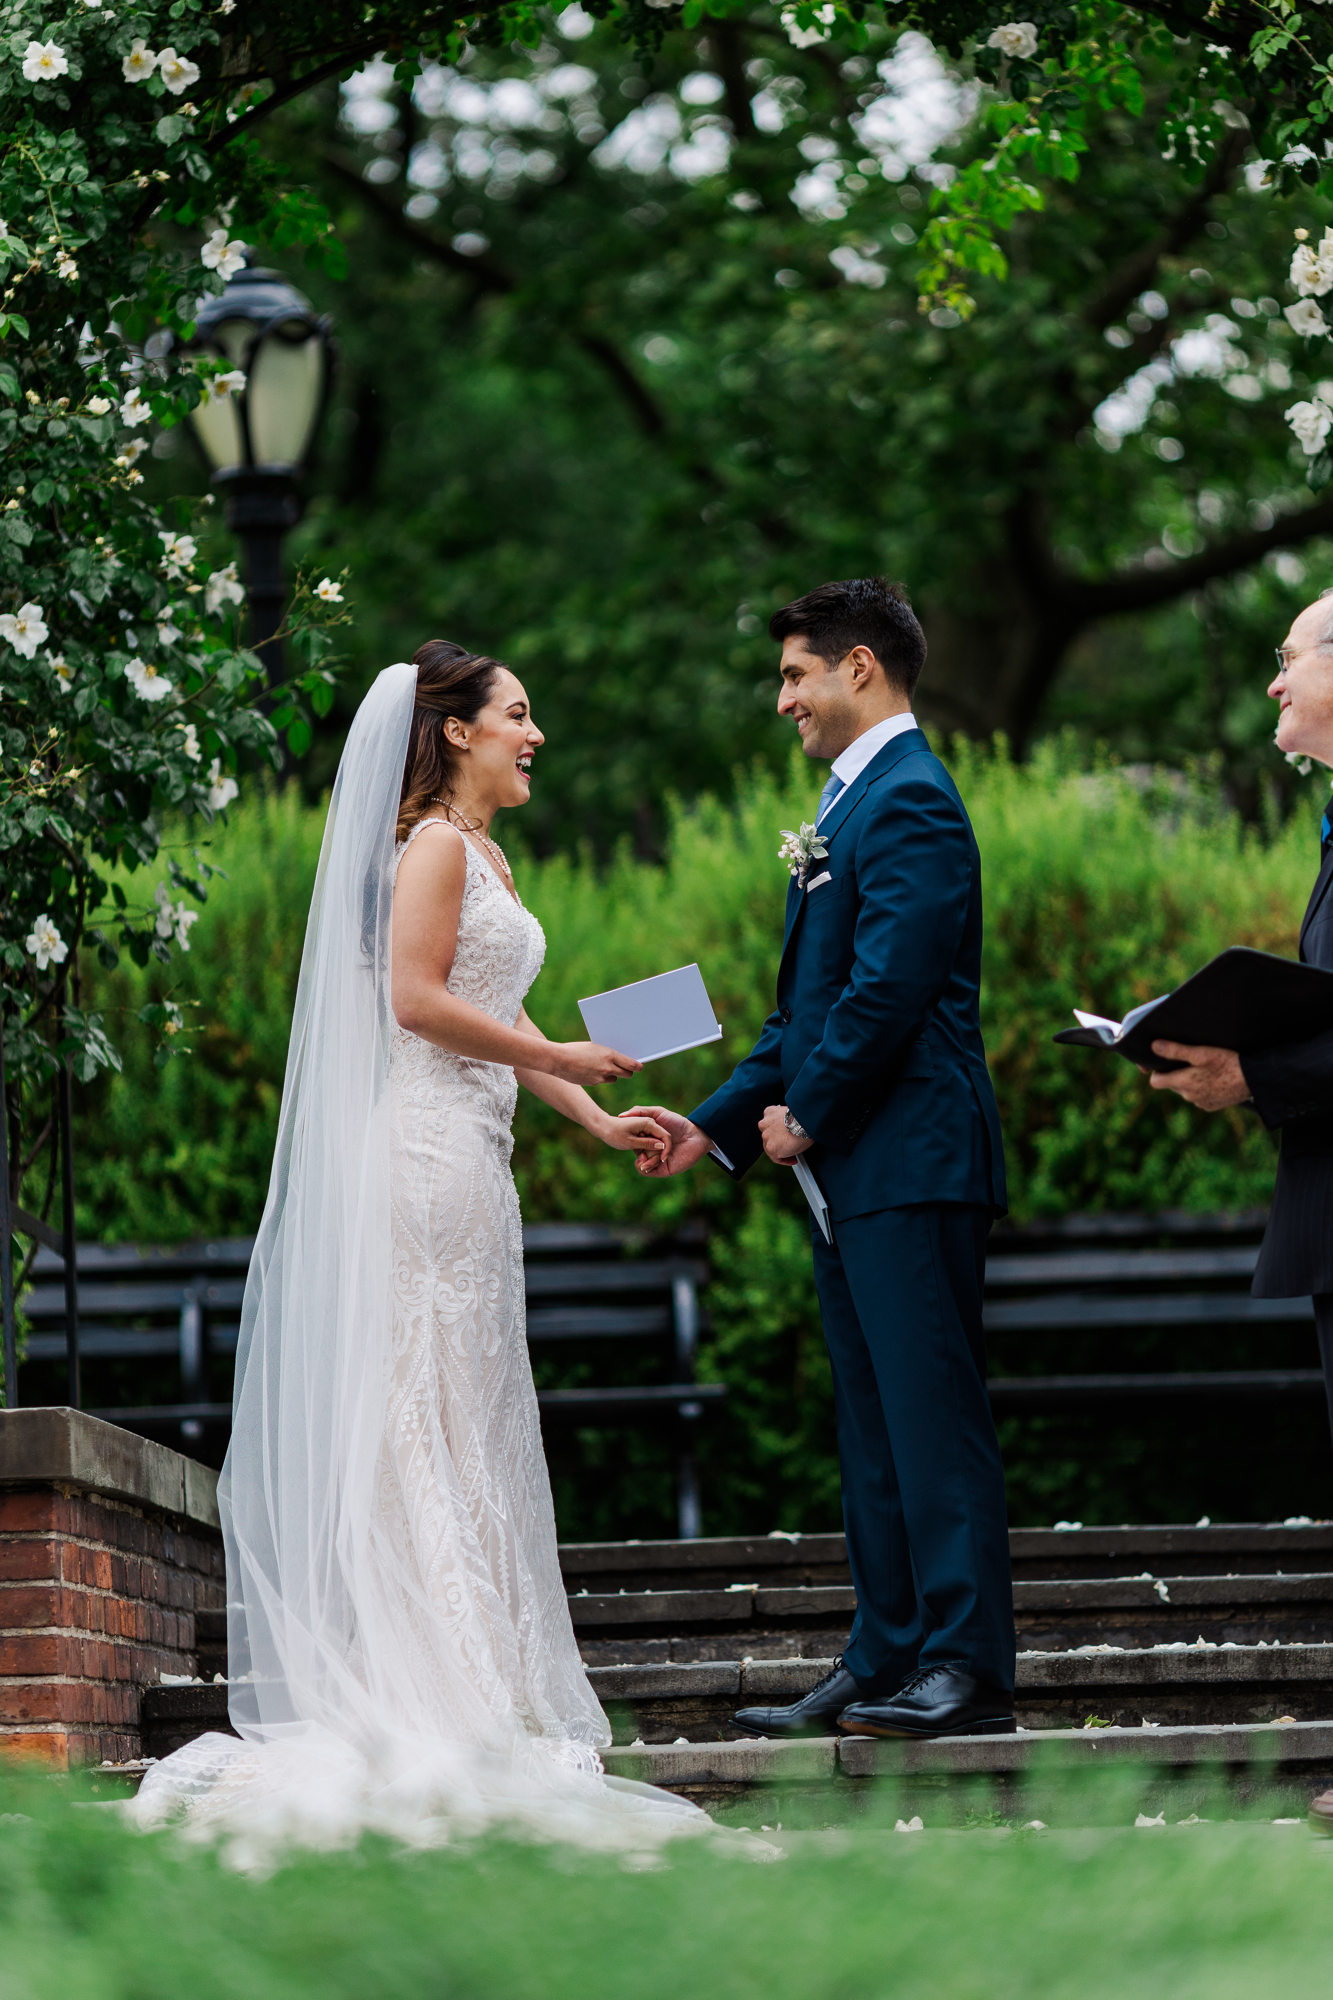 Exciting New York Wedding Photos in Conservatory Garden